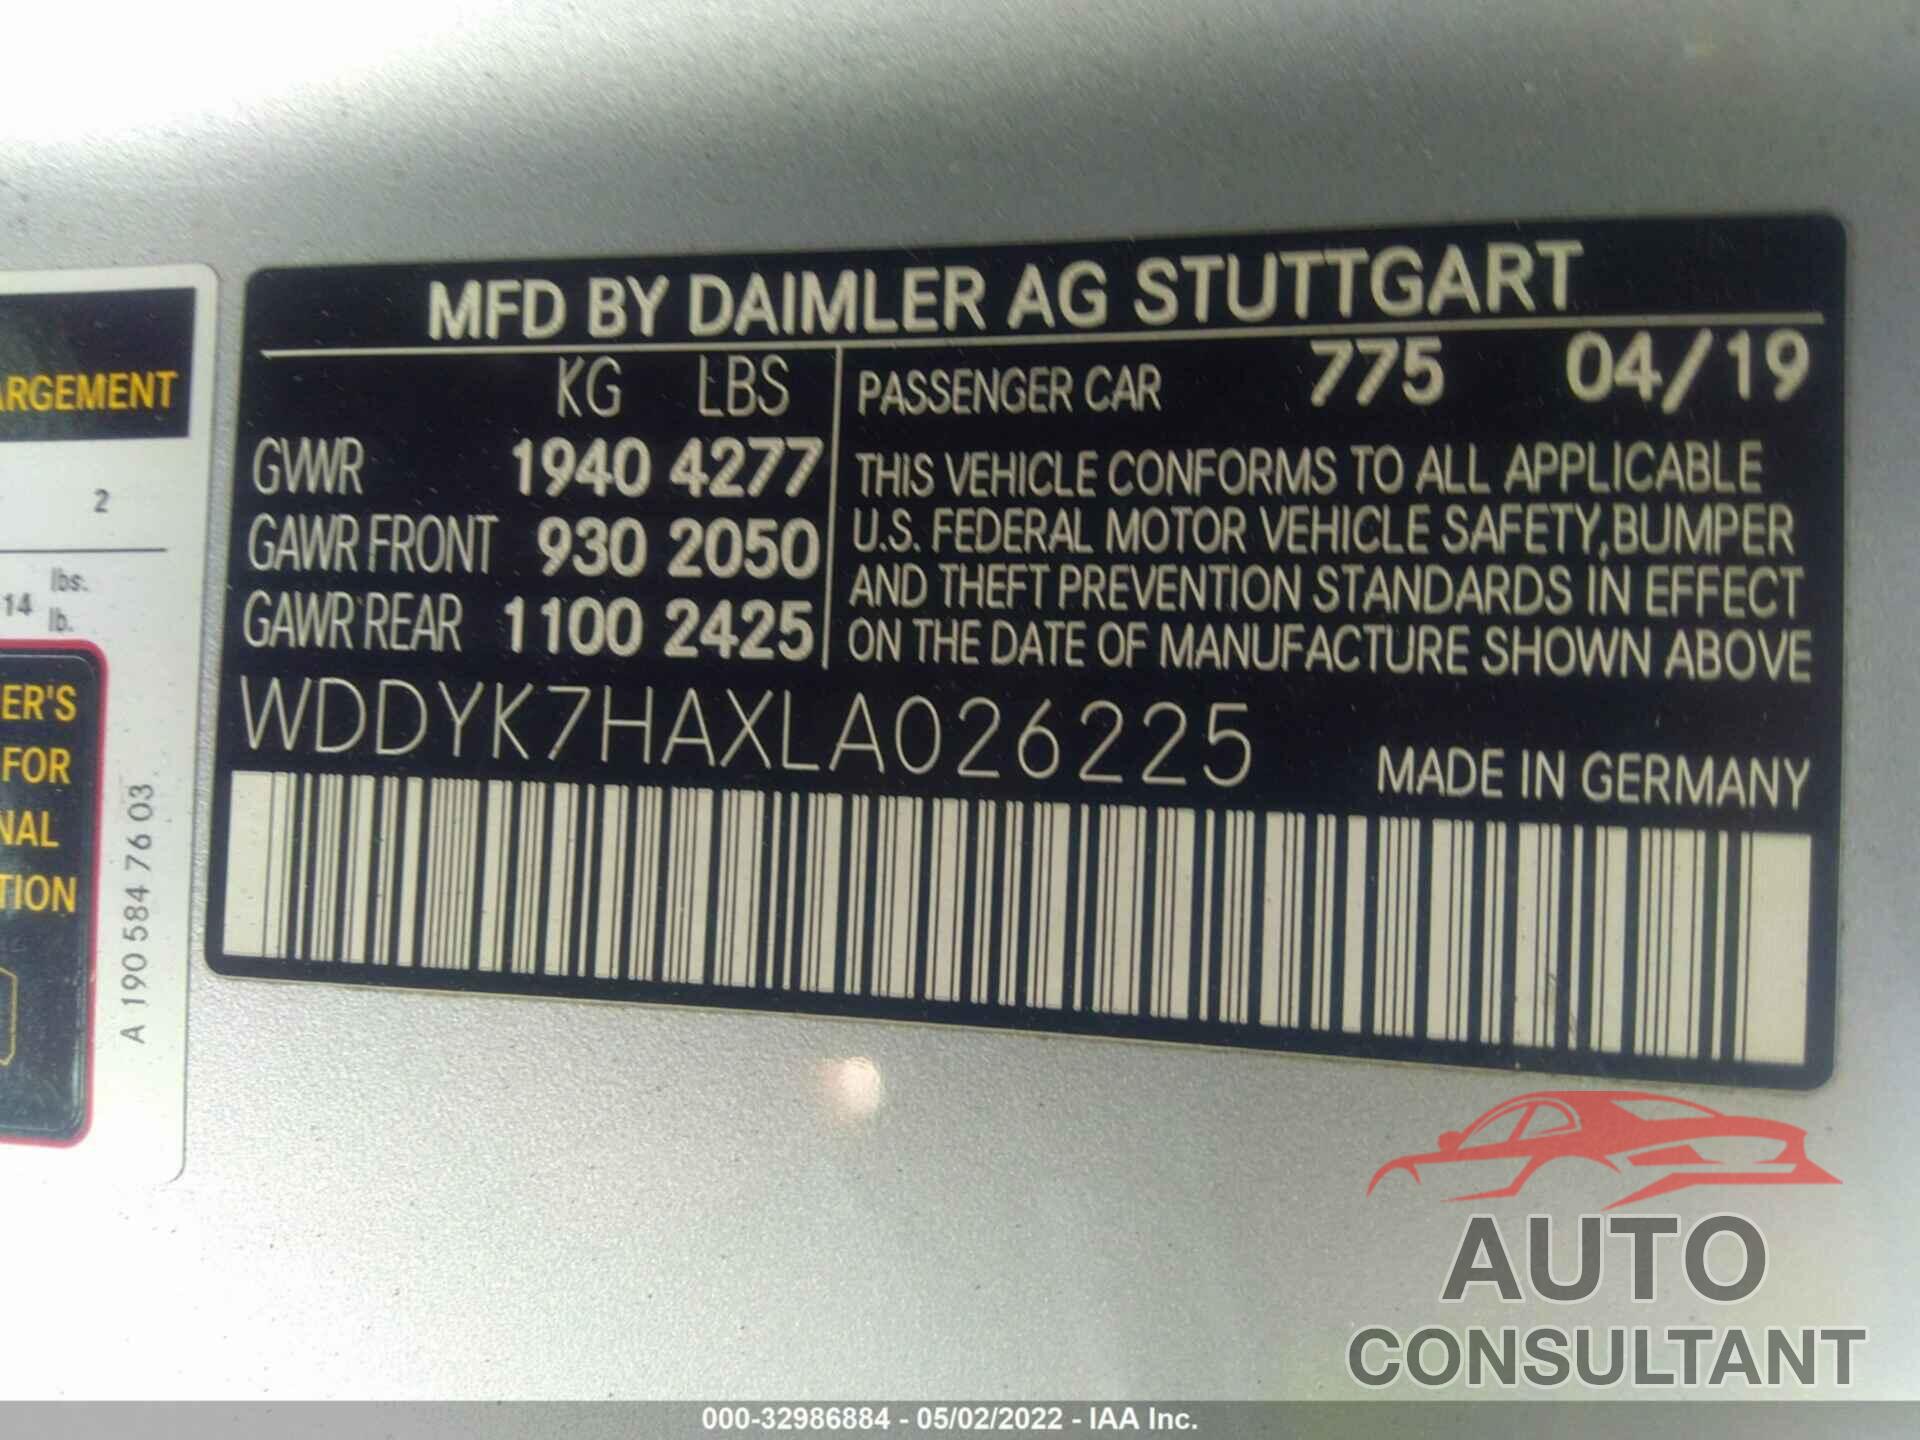 MERCEDES-BENZ AMG GT 2020 - WDDYK7HAXLA026225